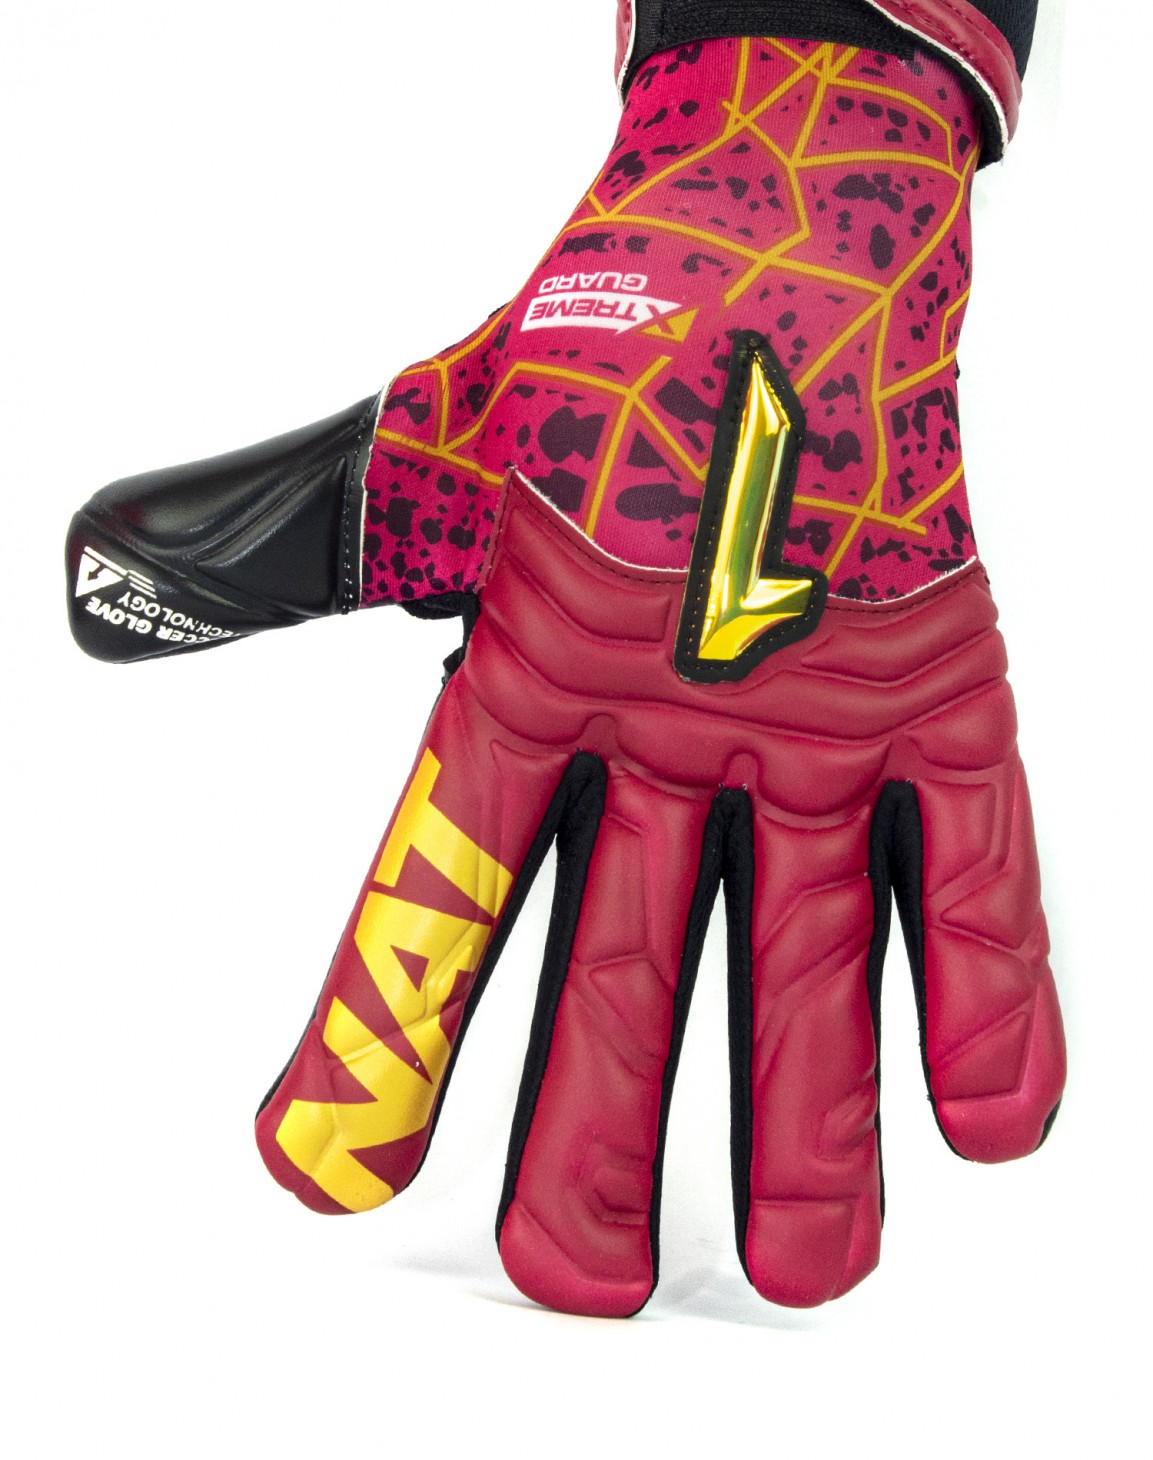 Kit de guantes de Fútbol Rinat Glove Glu Mega Grip Unisex